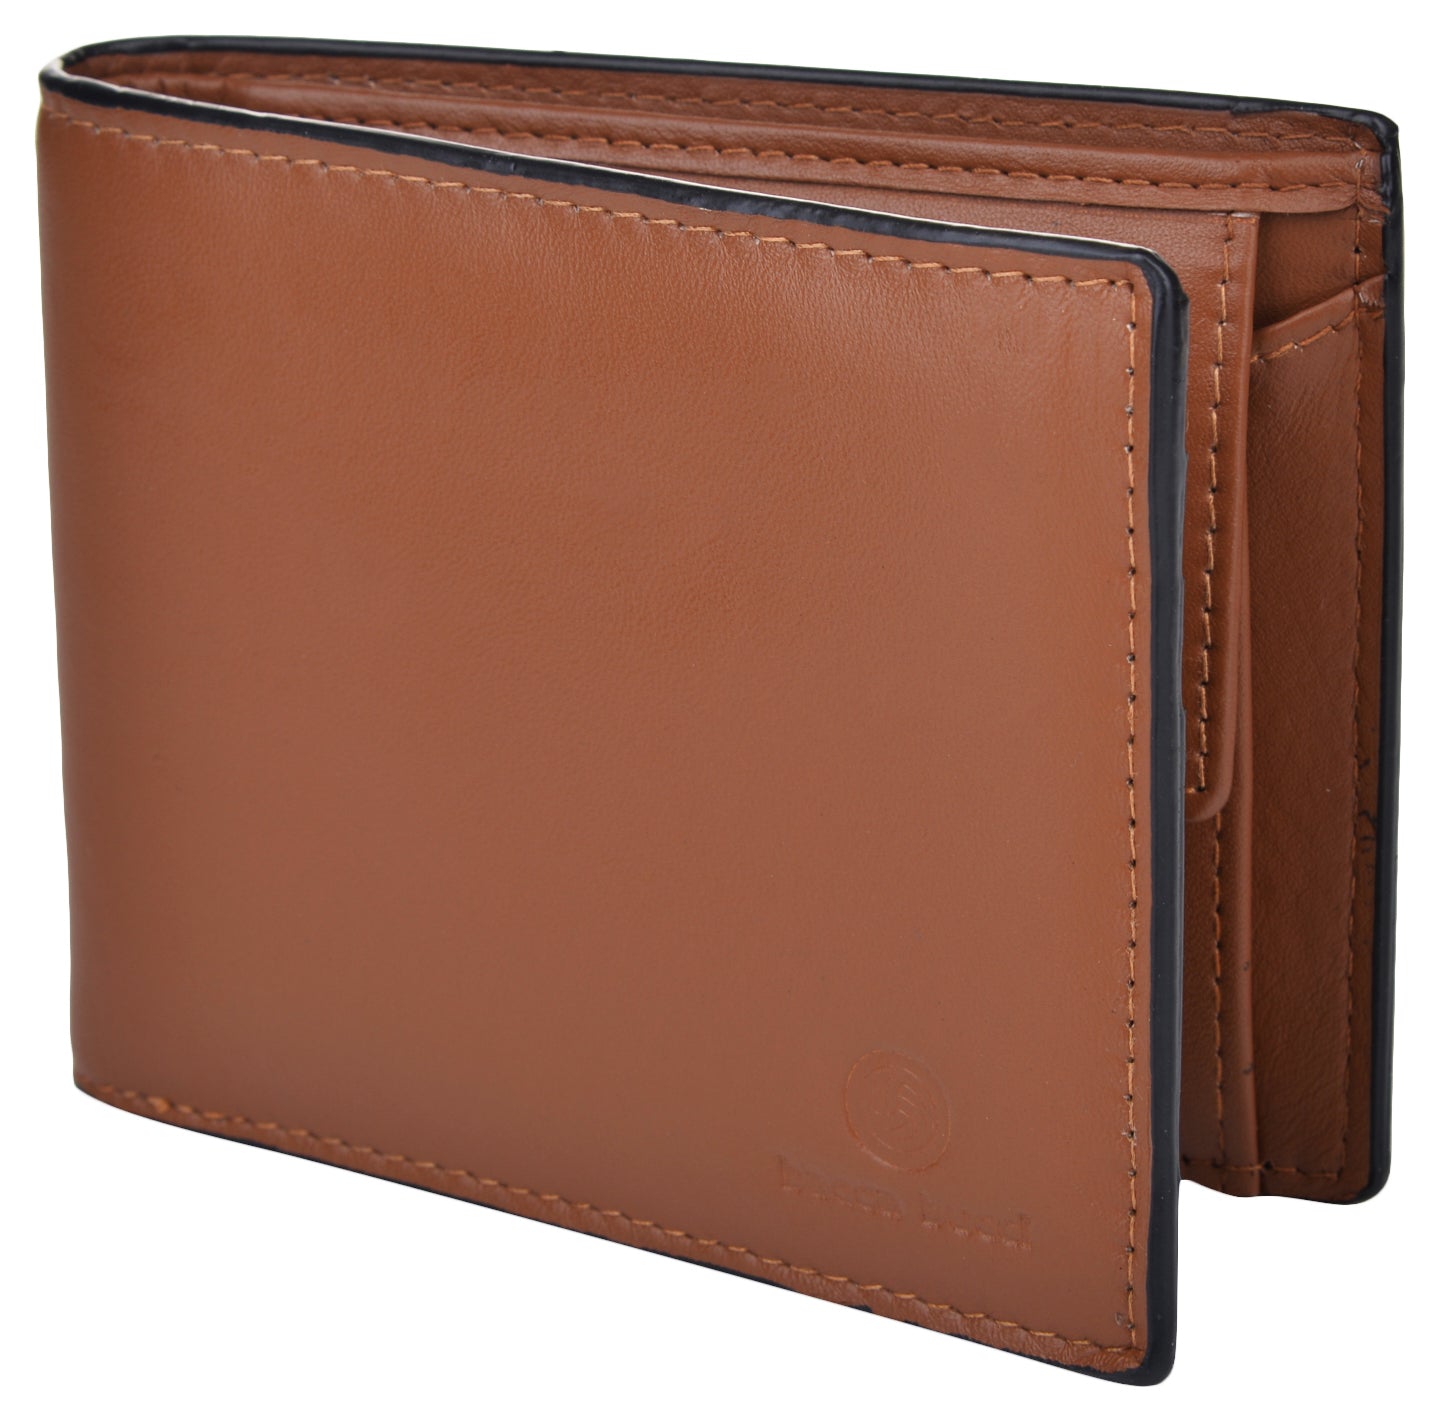 RFID Blocking Wallet for Men  Men's Wallet & Belt Combo Gift Set